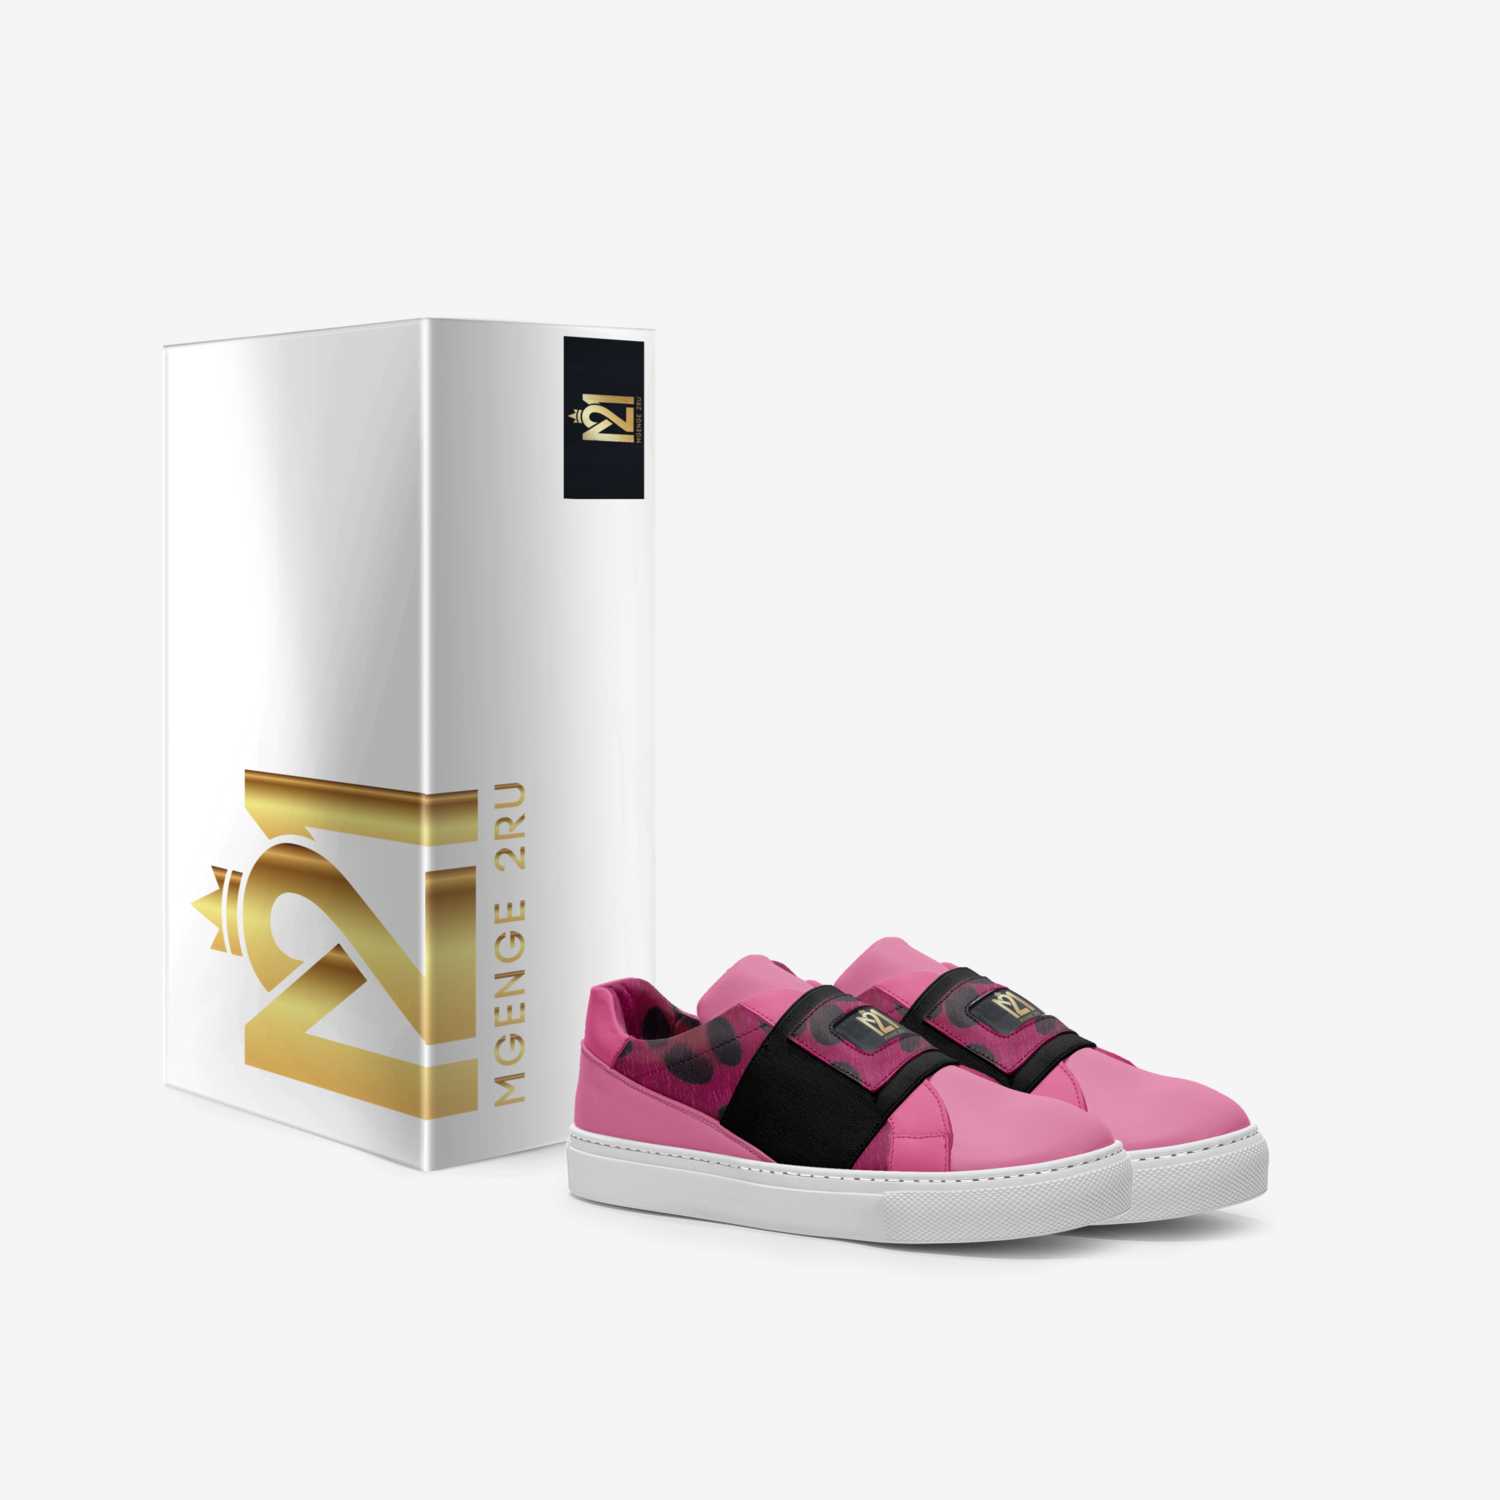 Mgenge2ru Kids custom made in Italy shoes by Hubert Nakitare | Box view